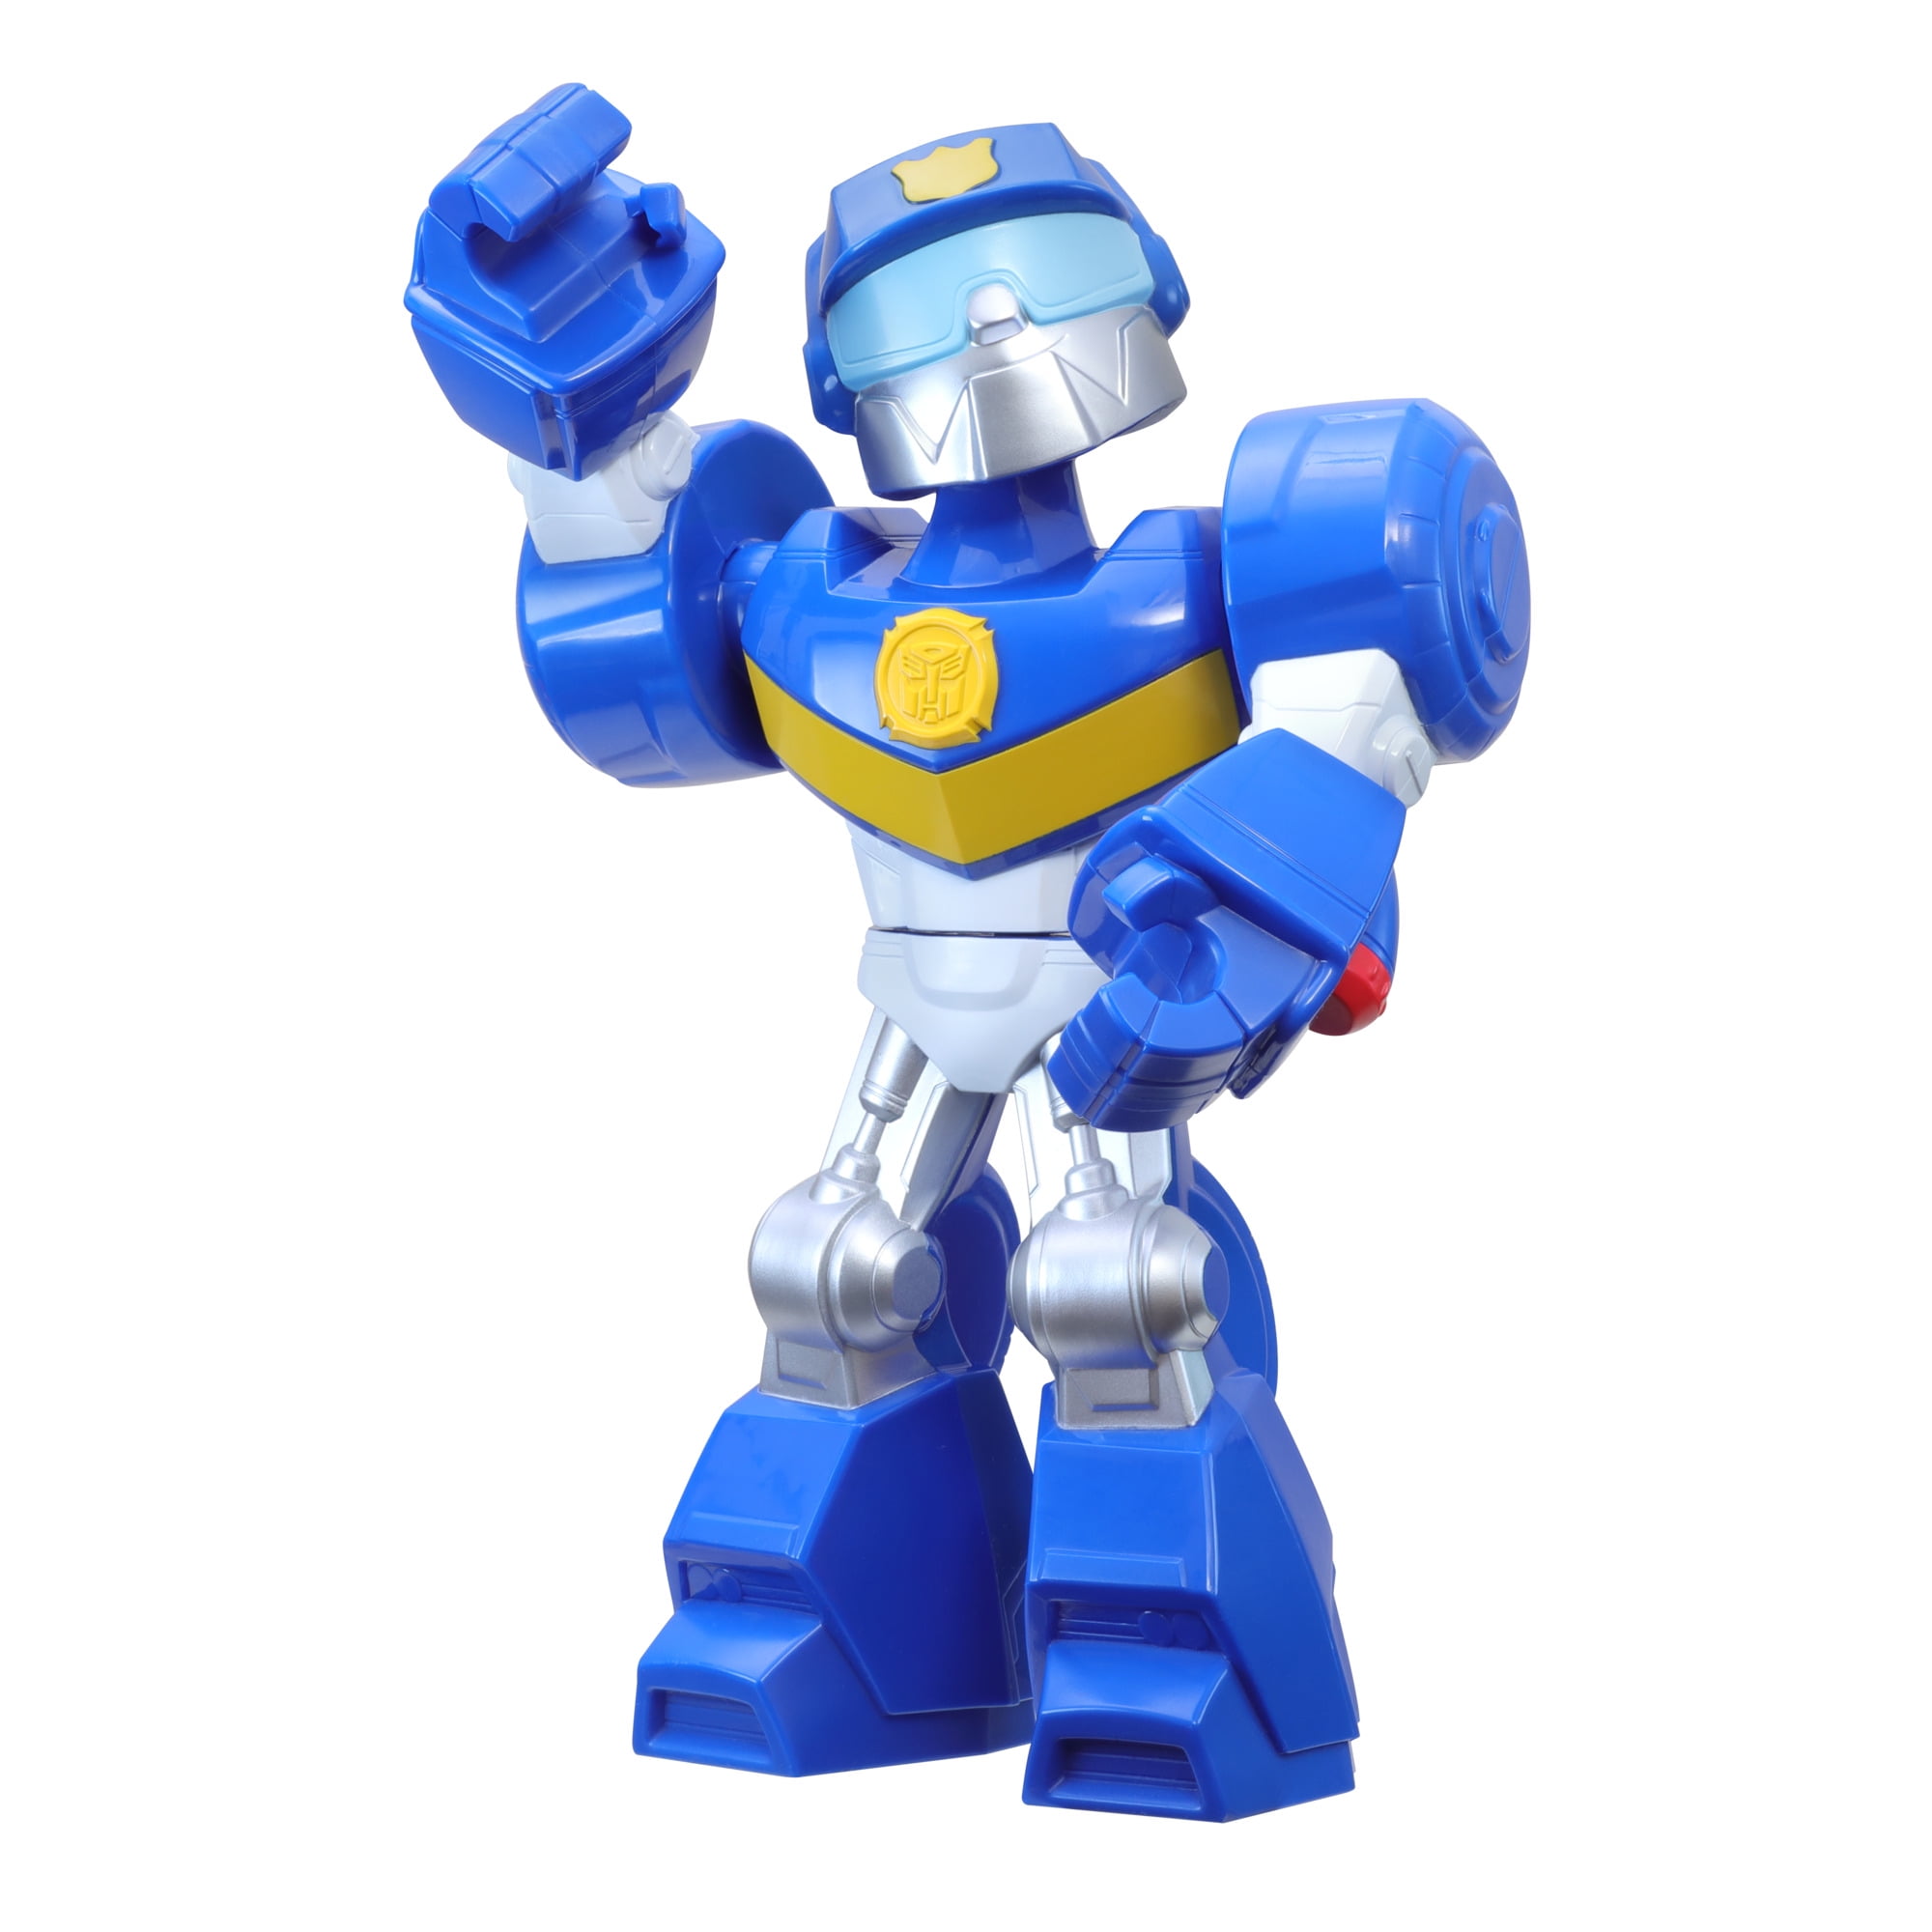 Playskool B1013 Heroes Transformers Rescue Bots Blurr Figure 